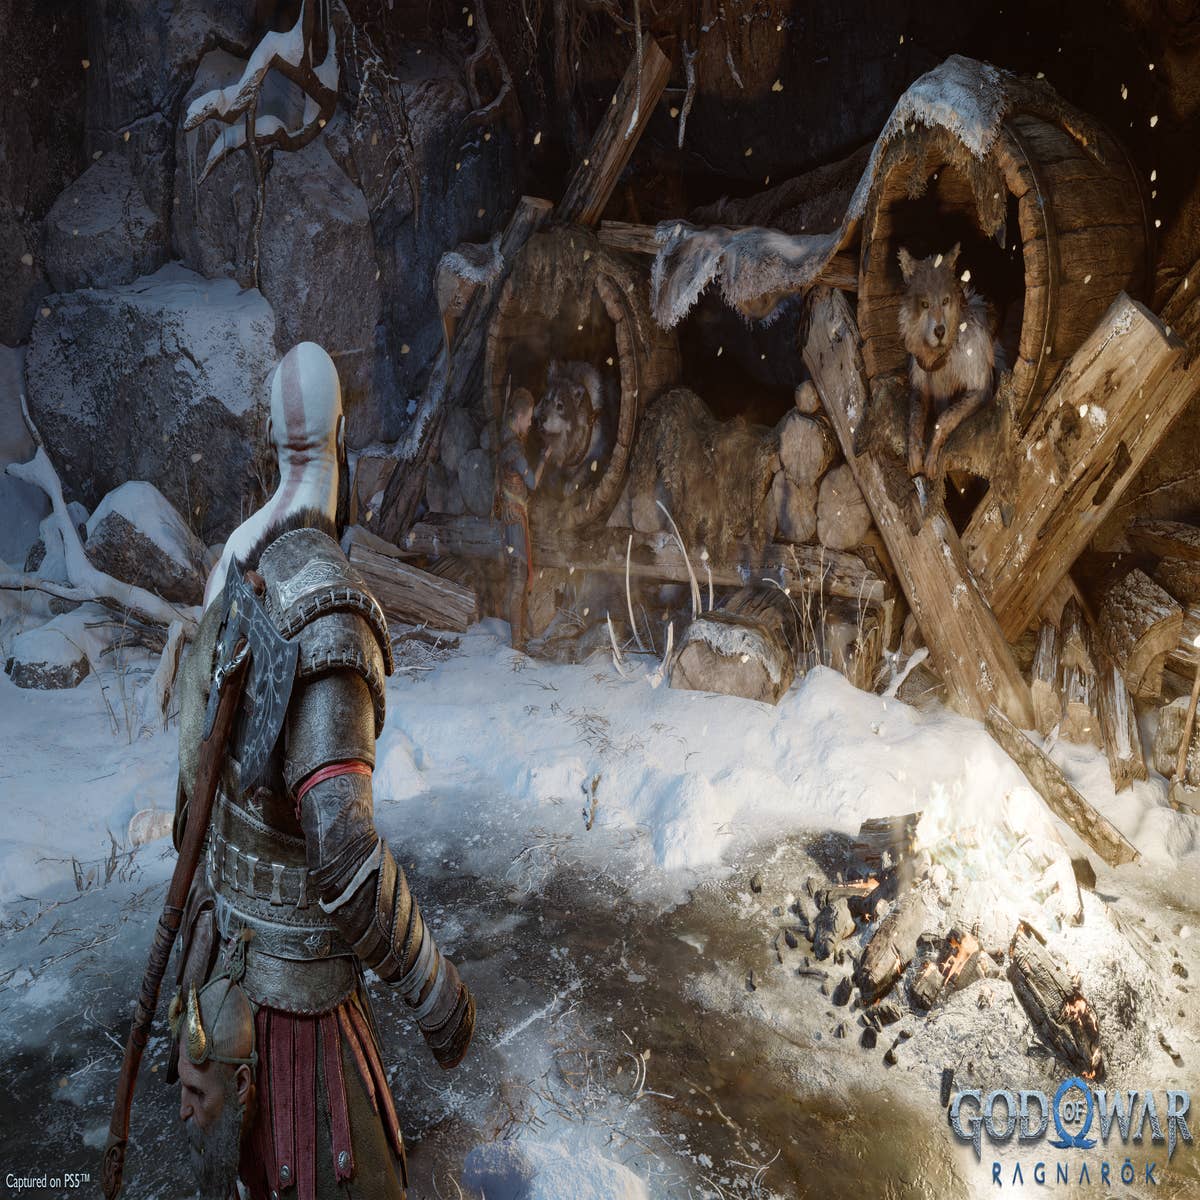 Moving Kratos: A deep dive into God of War Ragnarök's animation